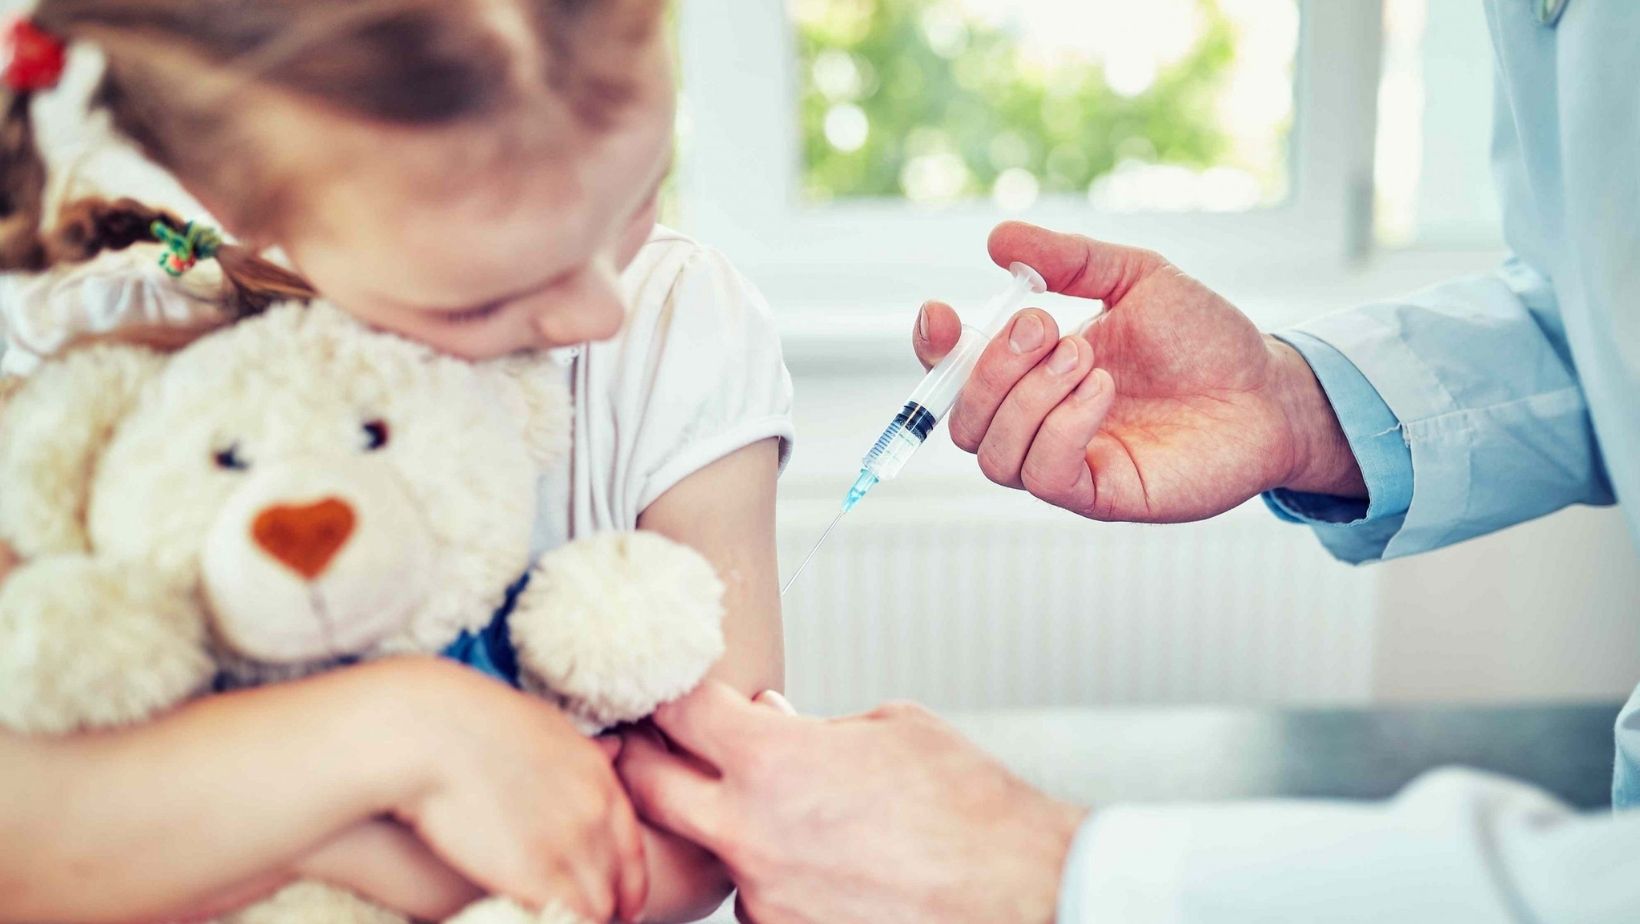 vaccinations for pre-school children in the Czech Republic